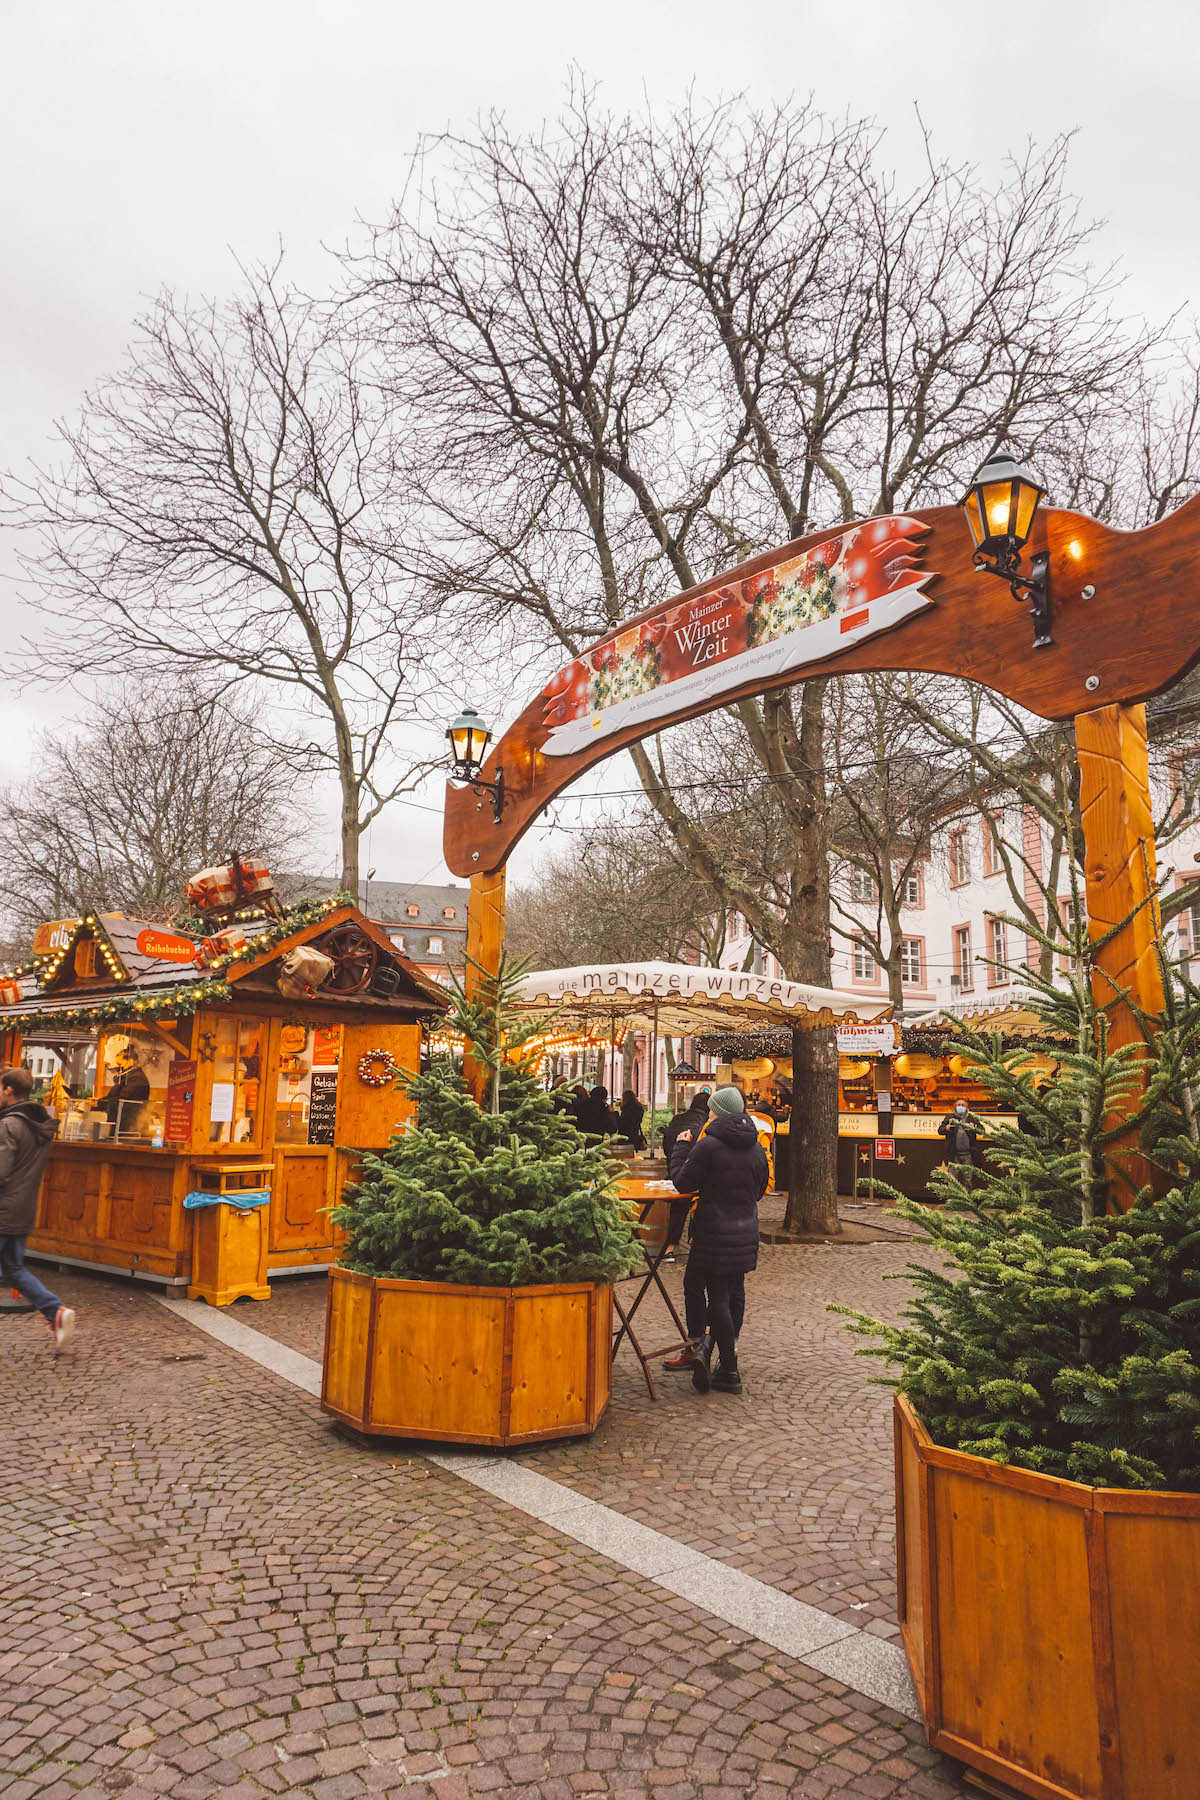 Entrance to Winterzeit market in Mainz Germany